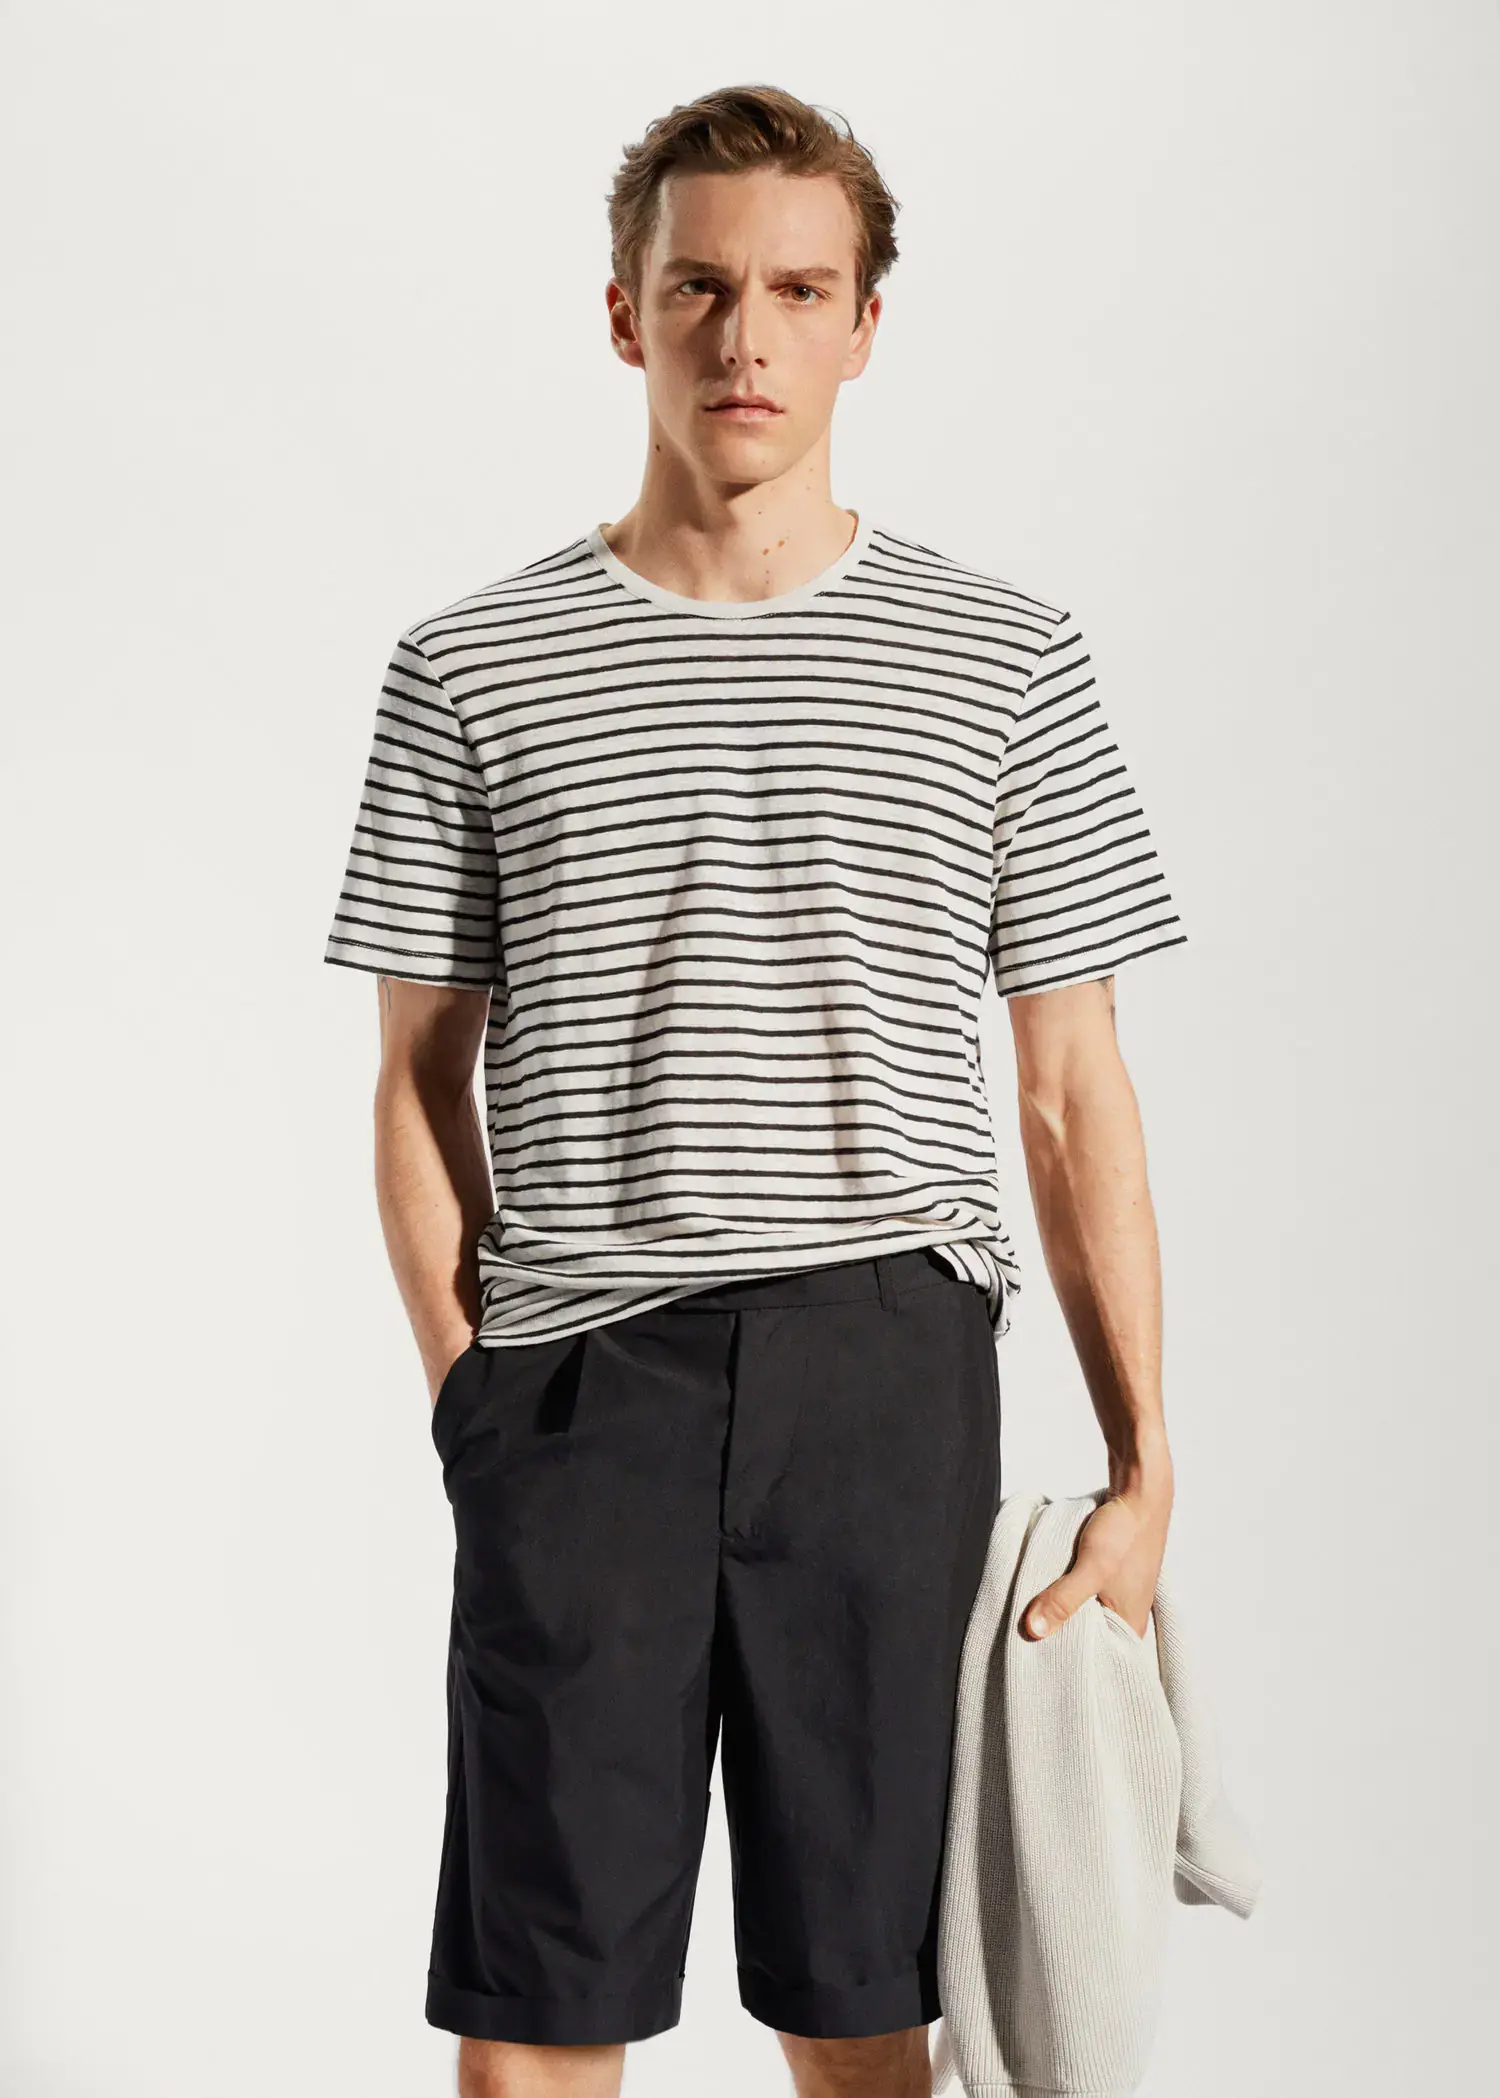 Mango 100% linen striped t-shirt. a young man wearing a striped shirt and black pants. 